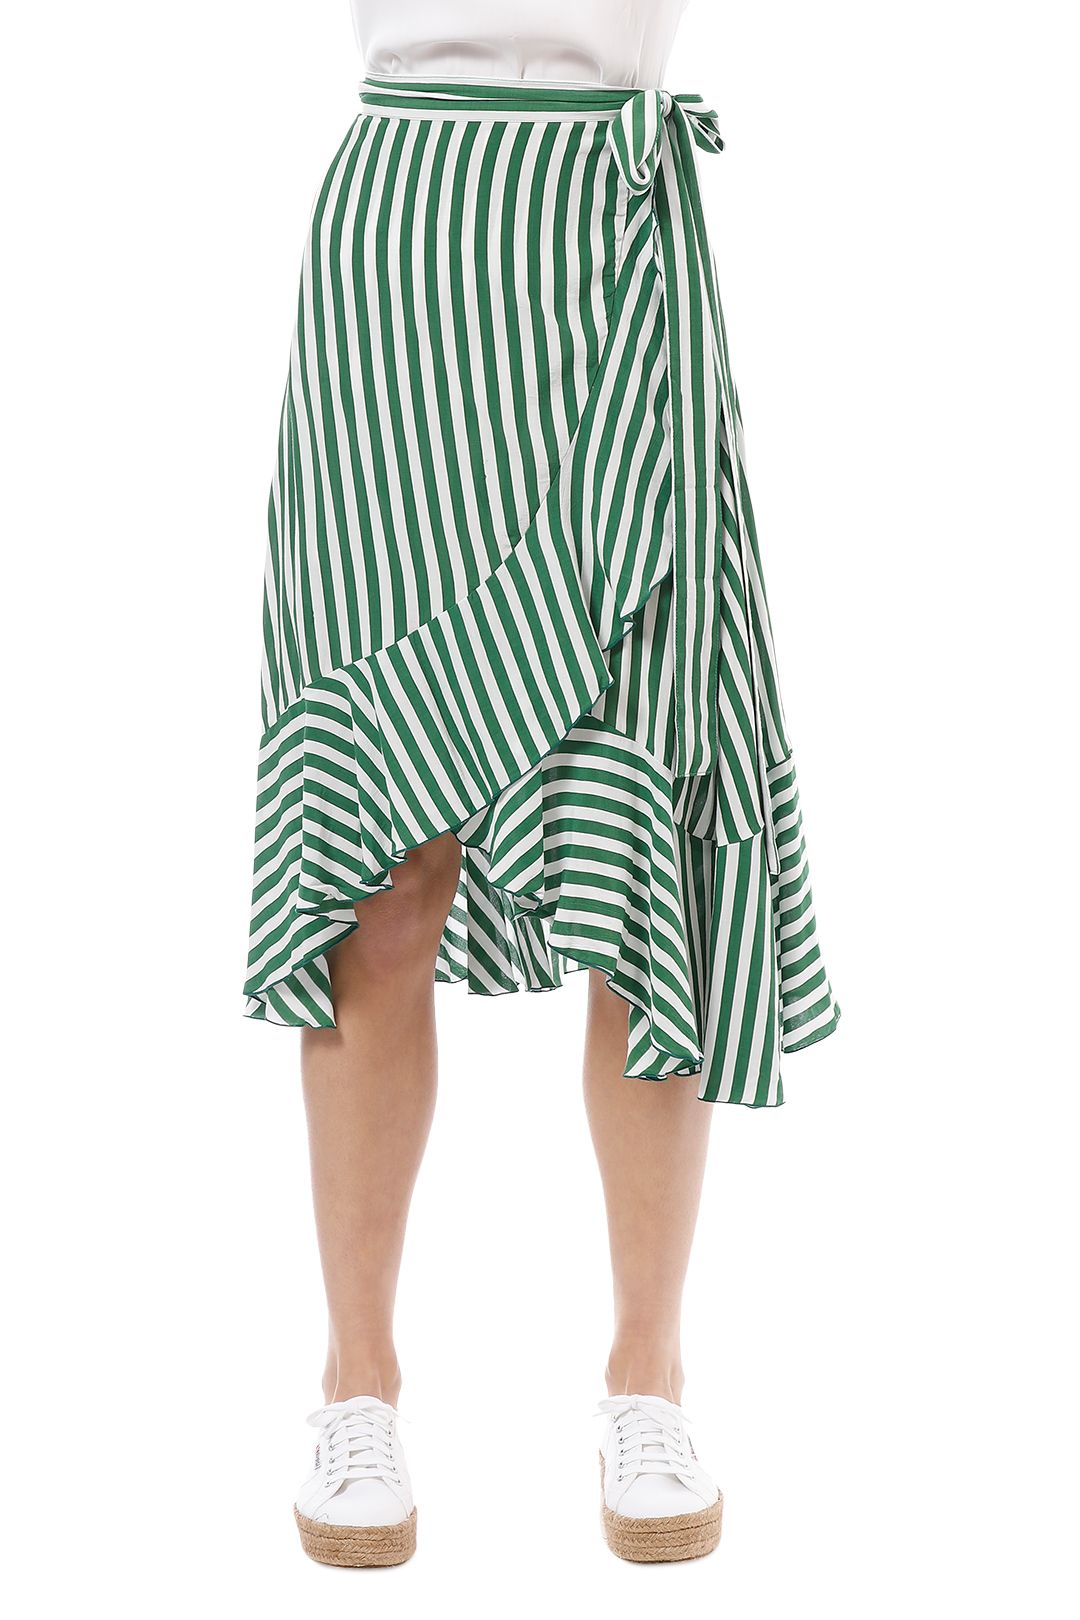 Faithfull - Tramoni Skirt - Zeus Stripe - Stripe - Crop